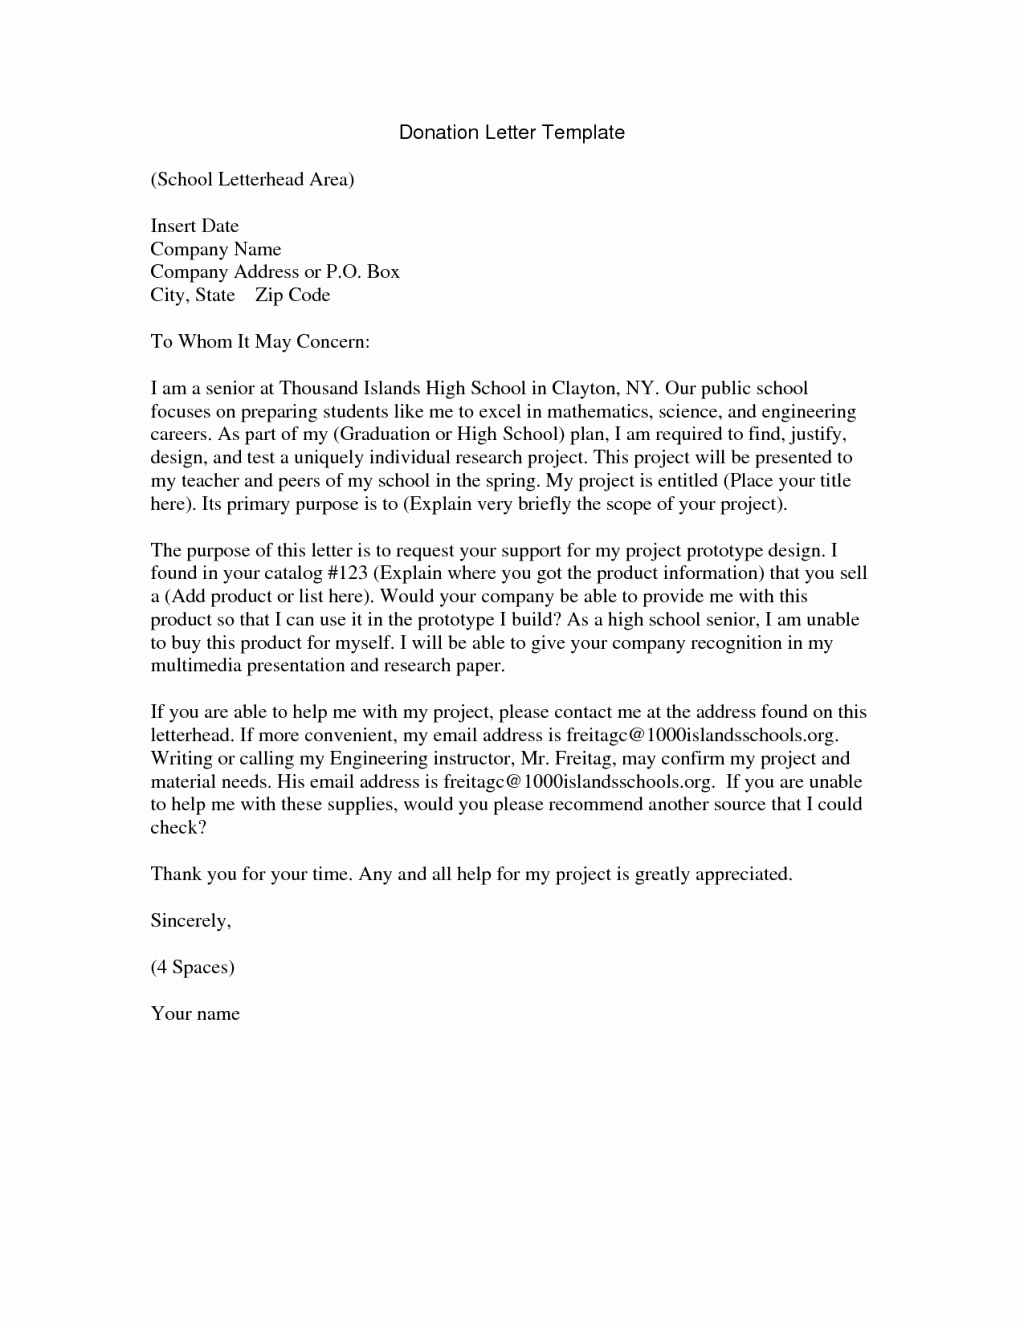 Business School Recommendation Letter Lovely Writing A Business School Letter Re Mendation Cover